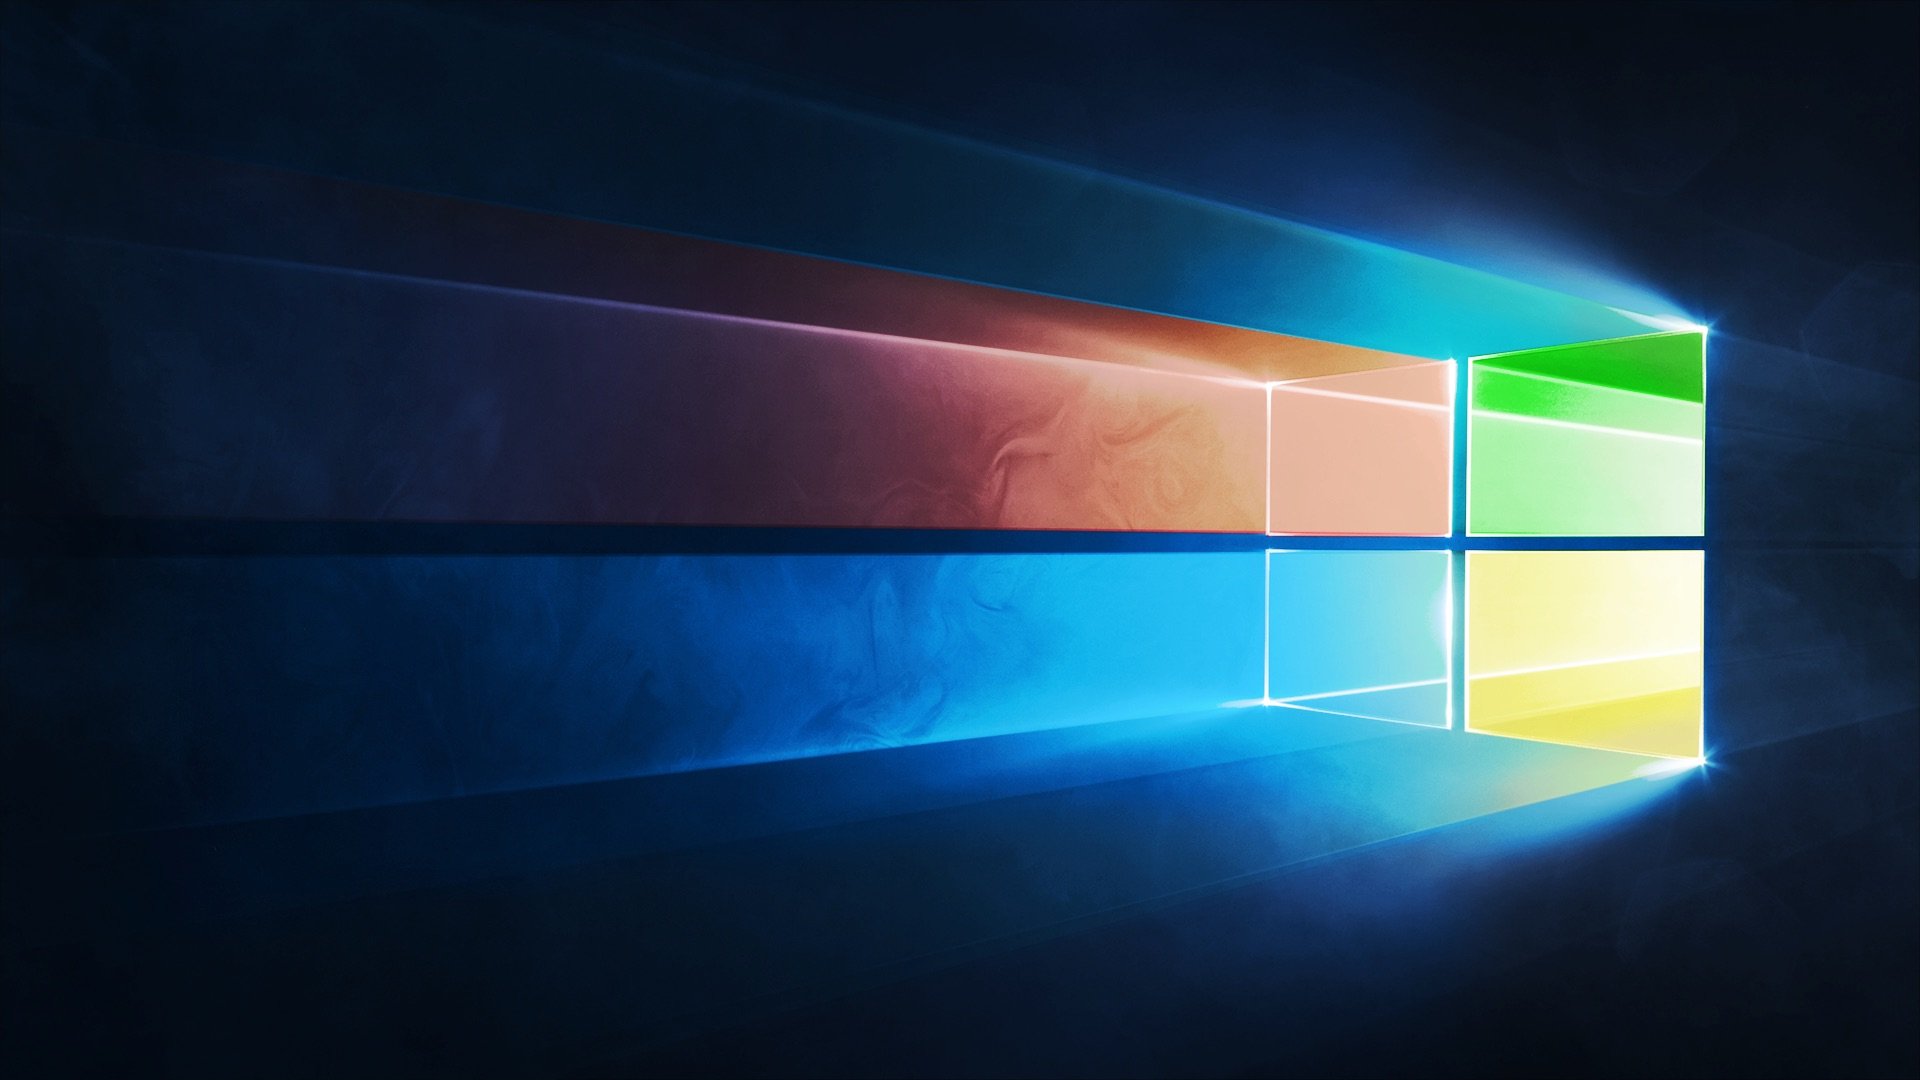 Windows 10 vs Windows 81 vs Windows 7 Performance   TechSpot